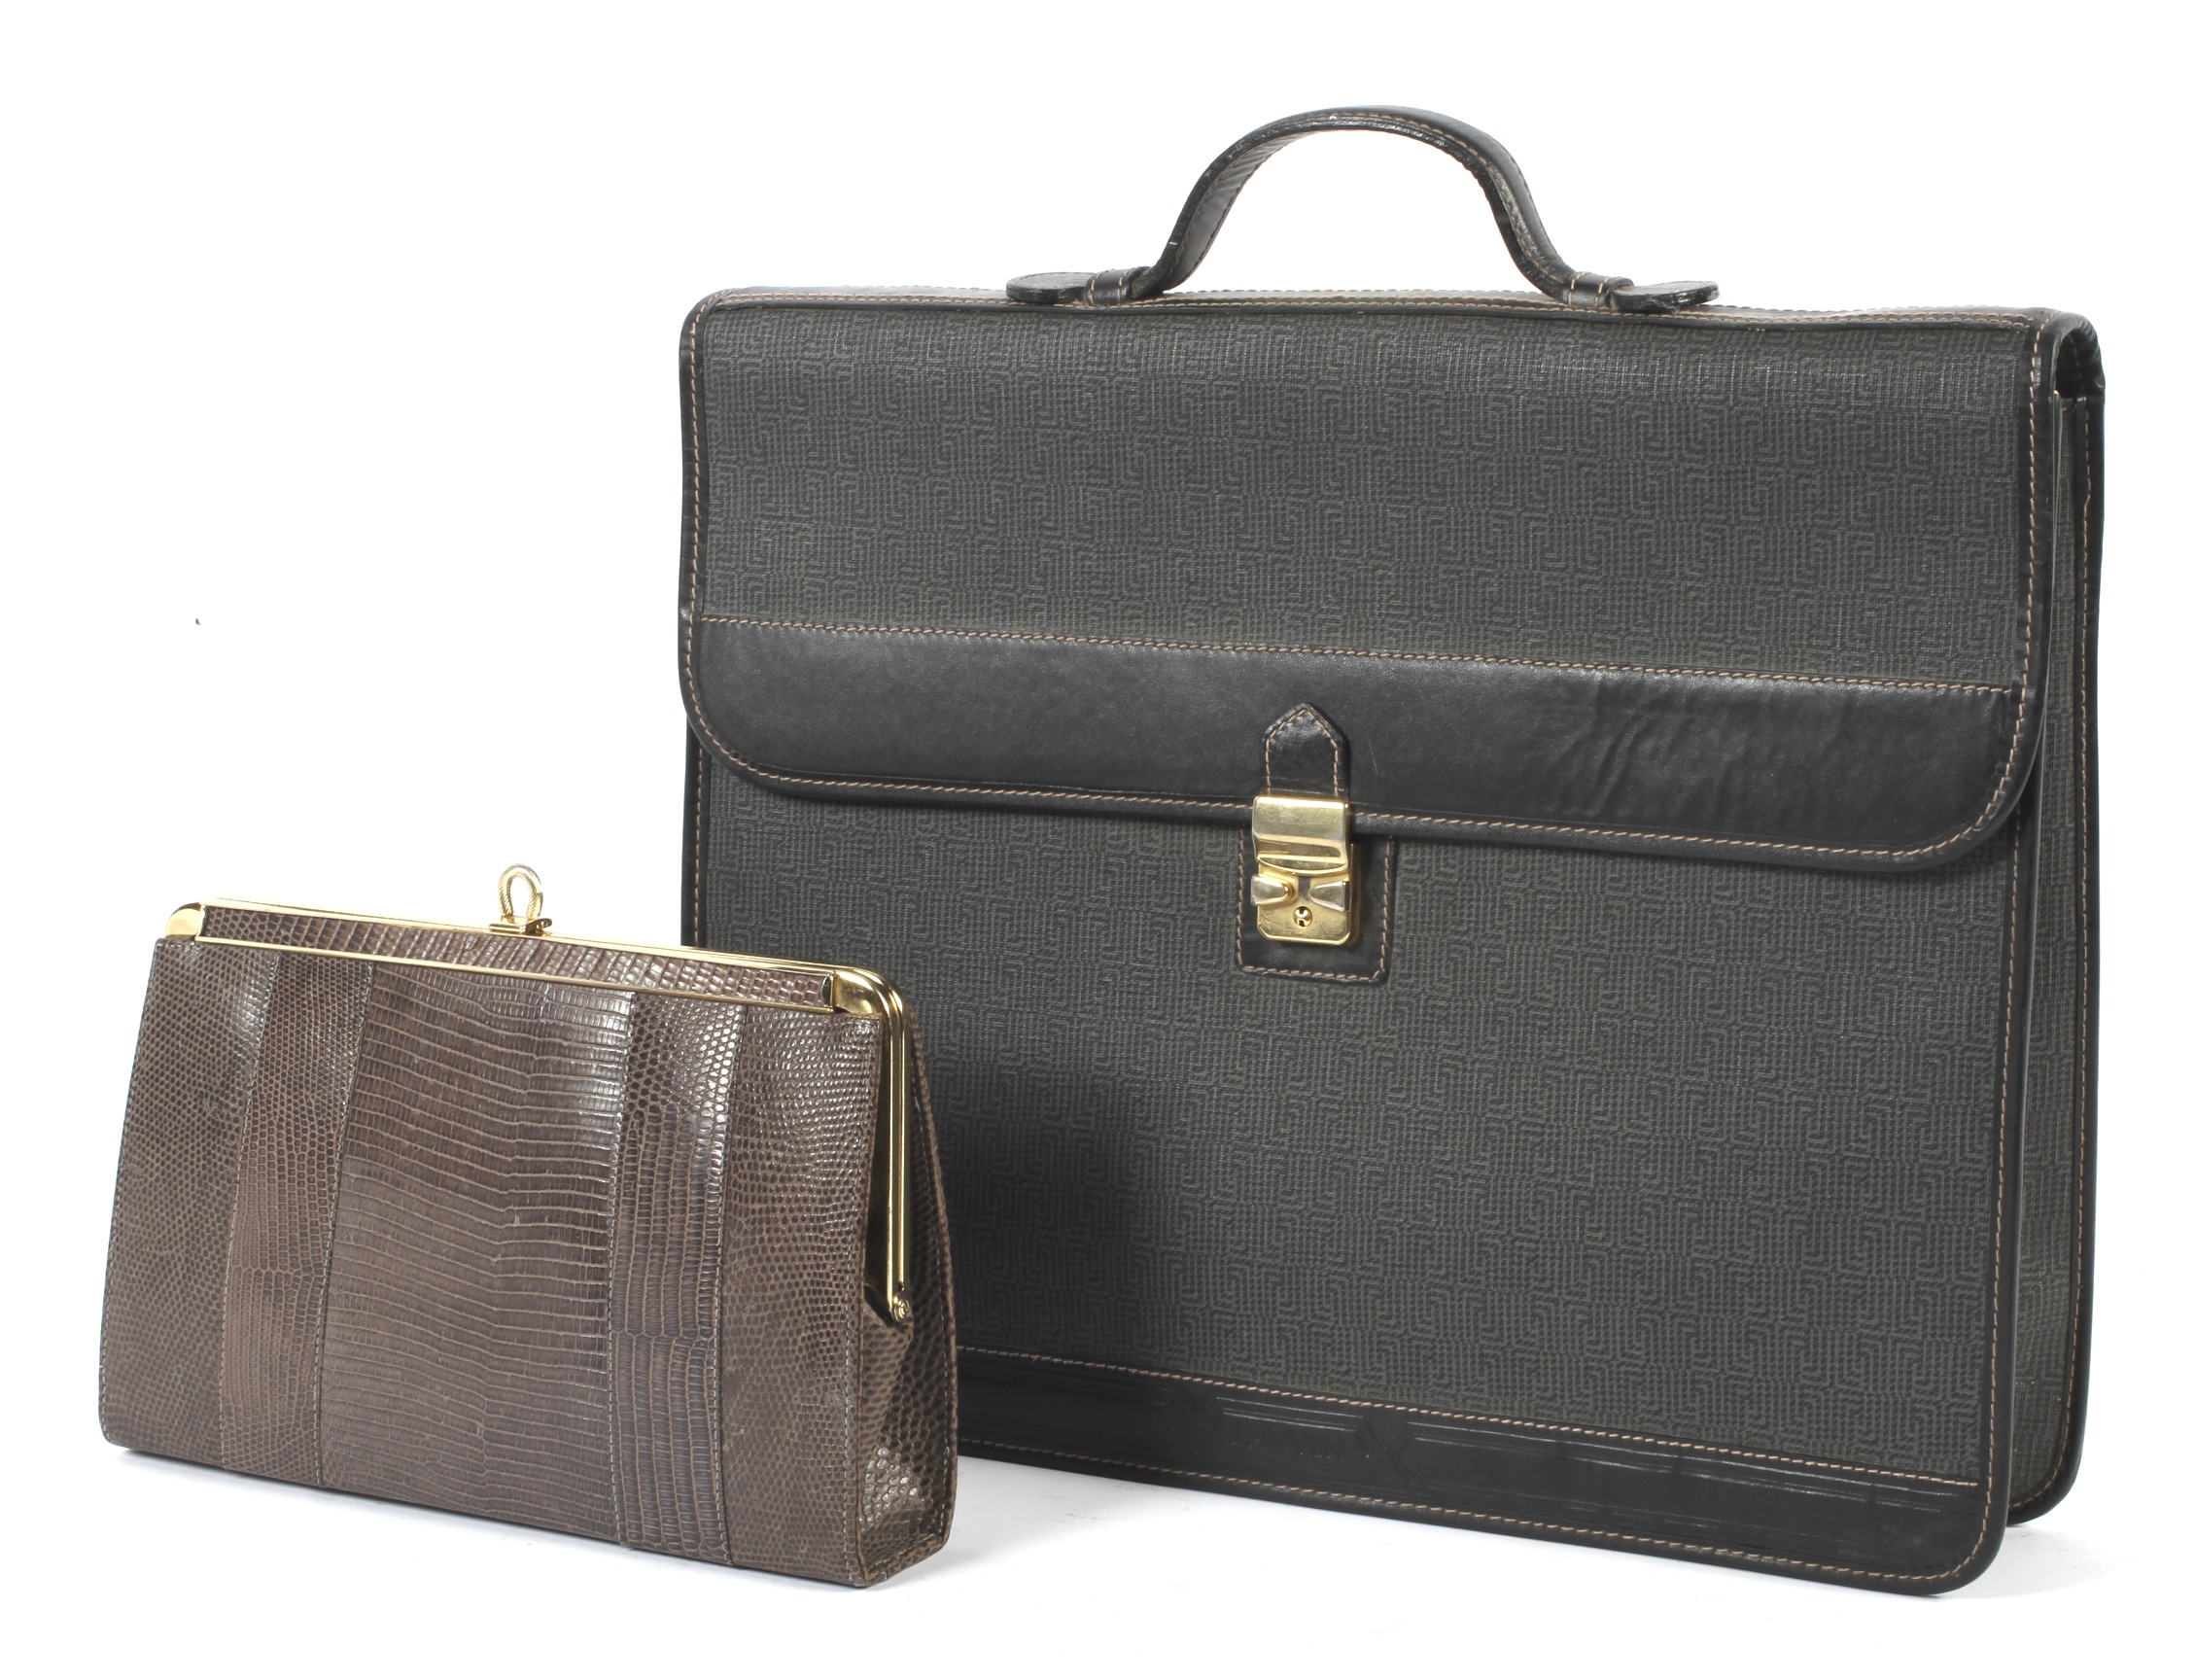 A Lanvin black leather satchel and a vintage ladies Widegate leather purse.